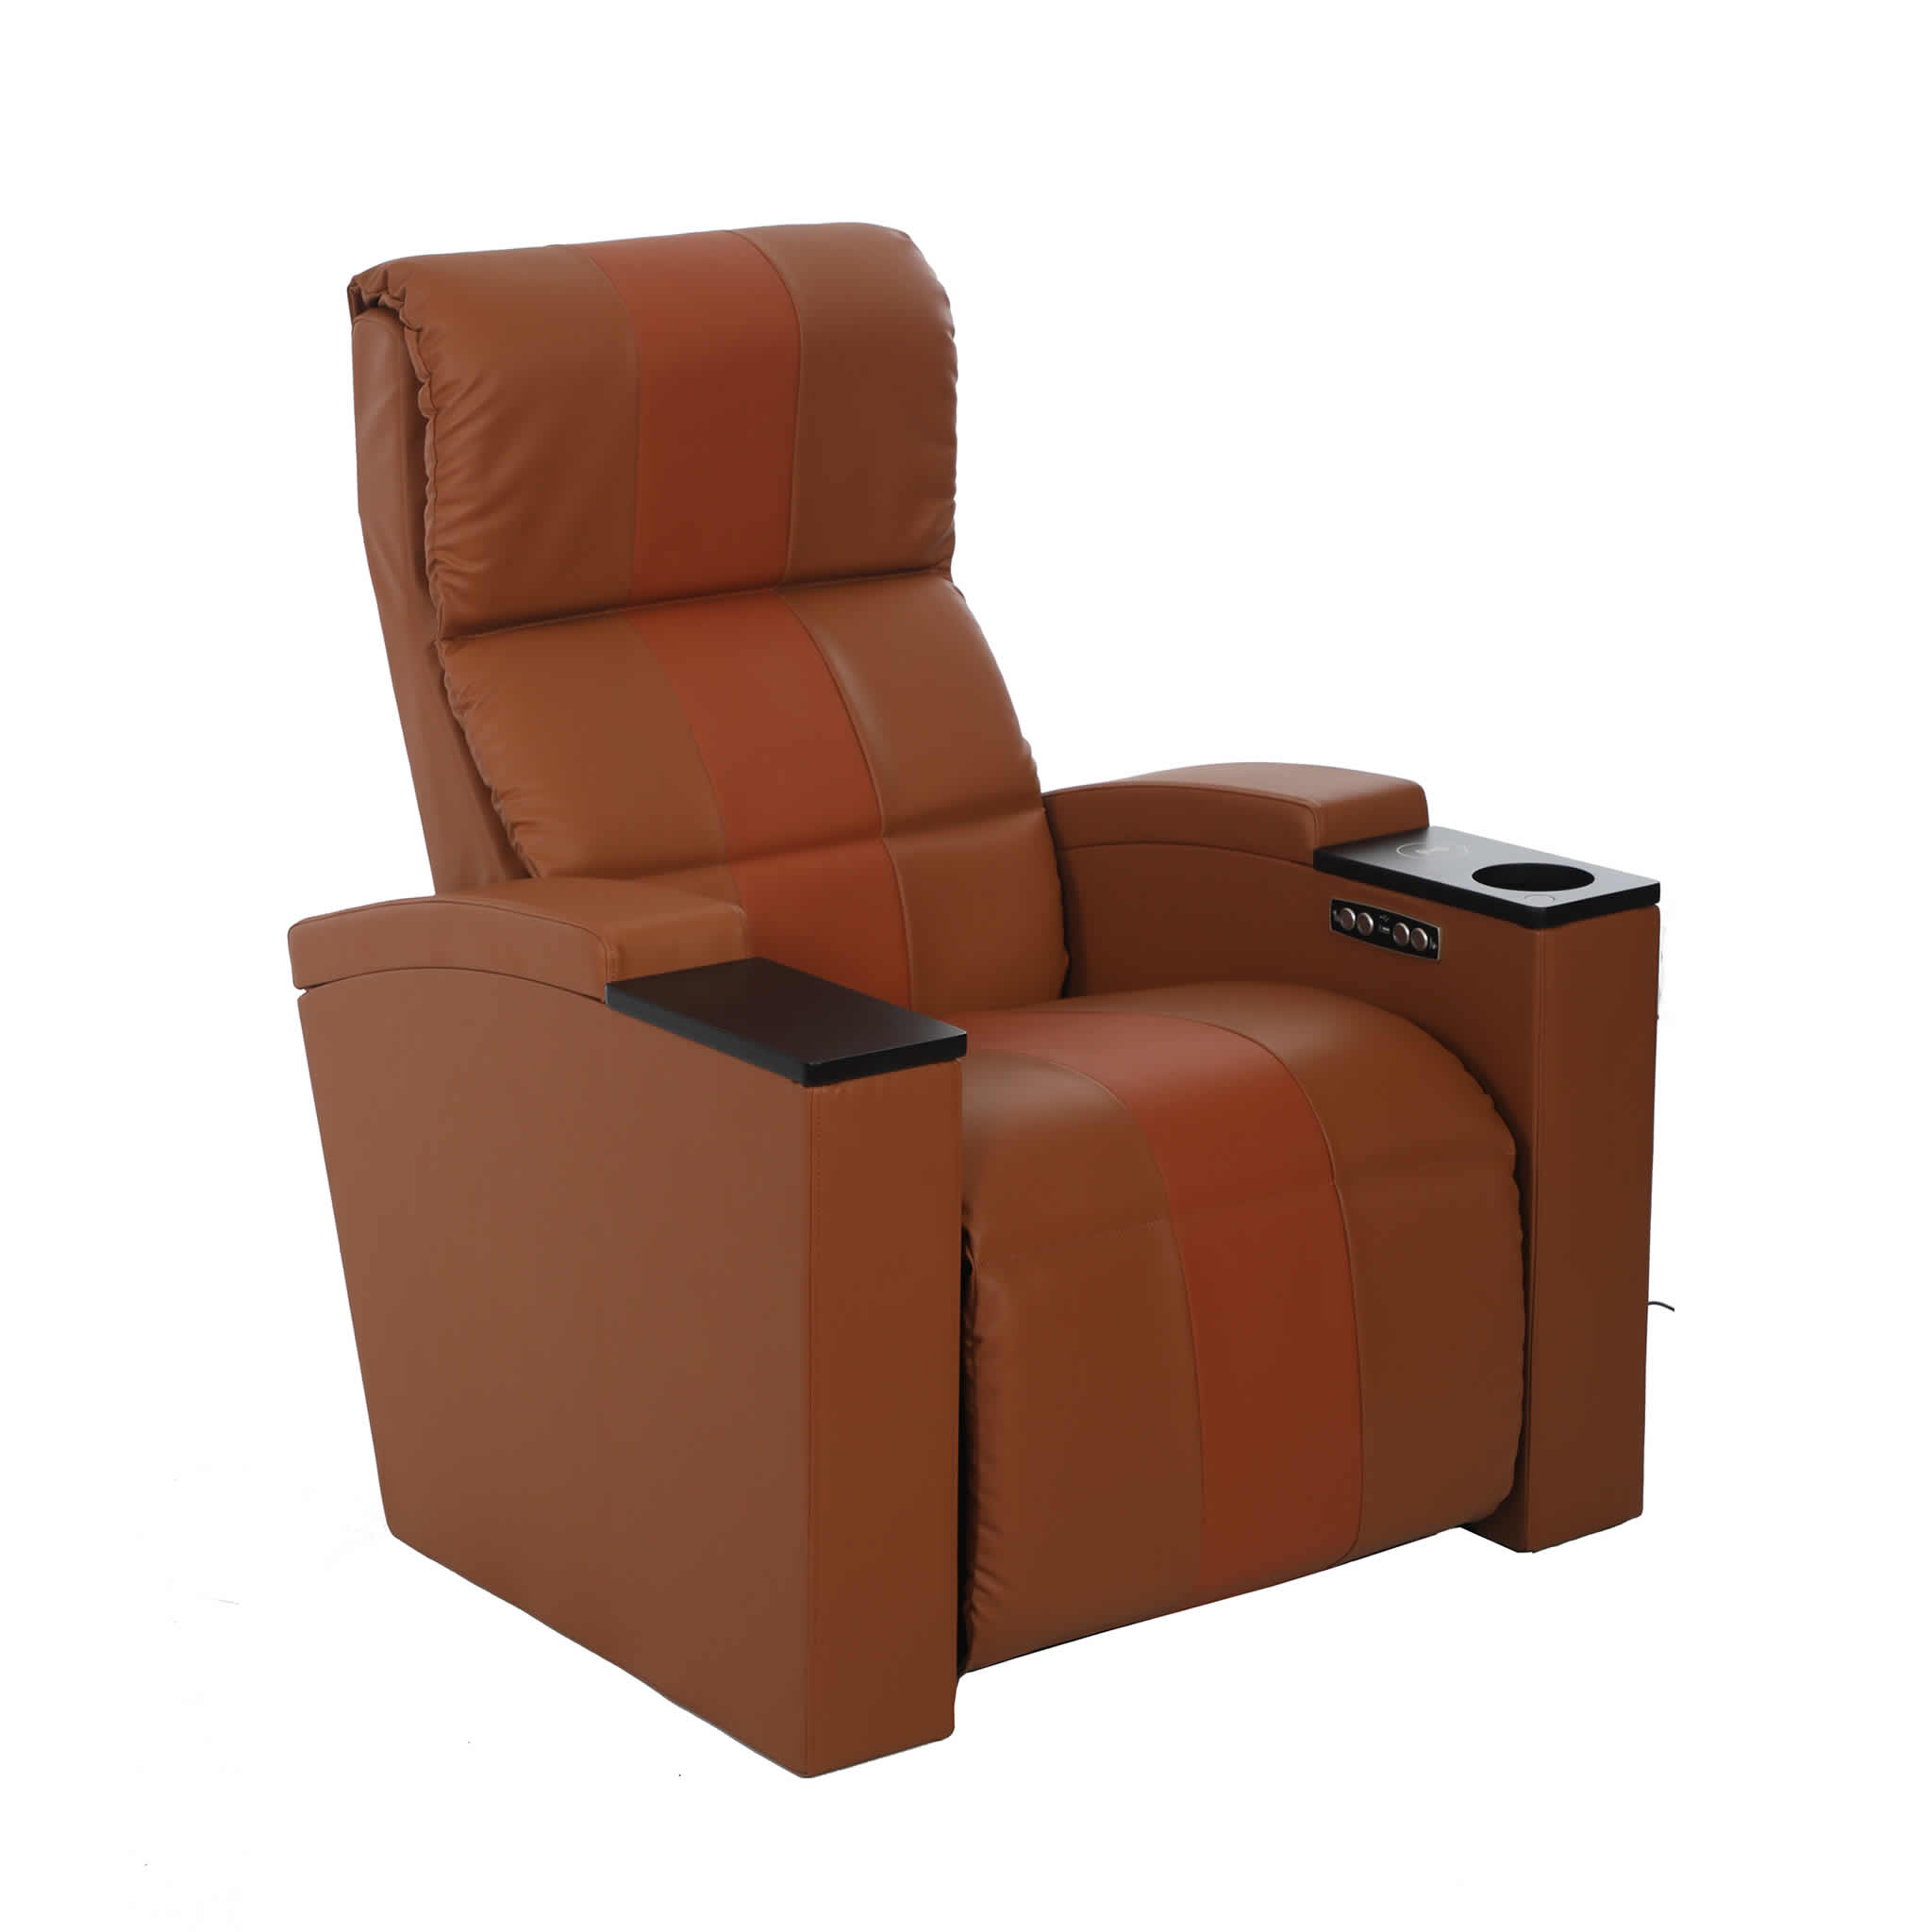 Simko Seating Product Recliner Cinema Seat Monstone 05